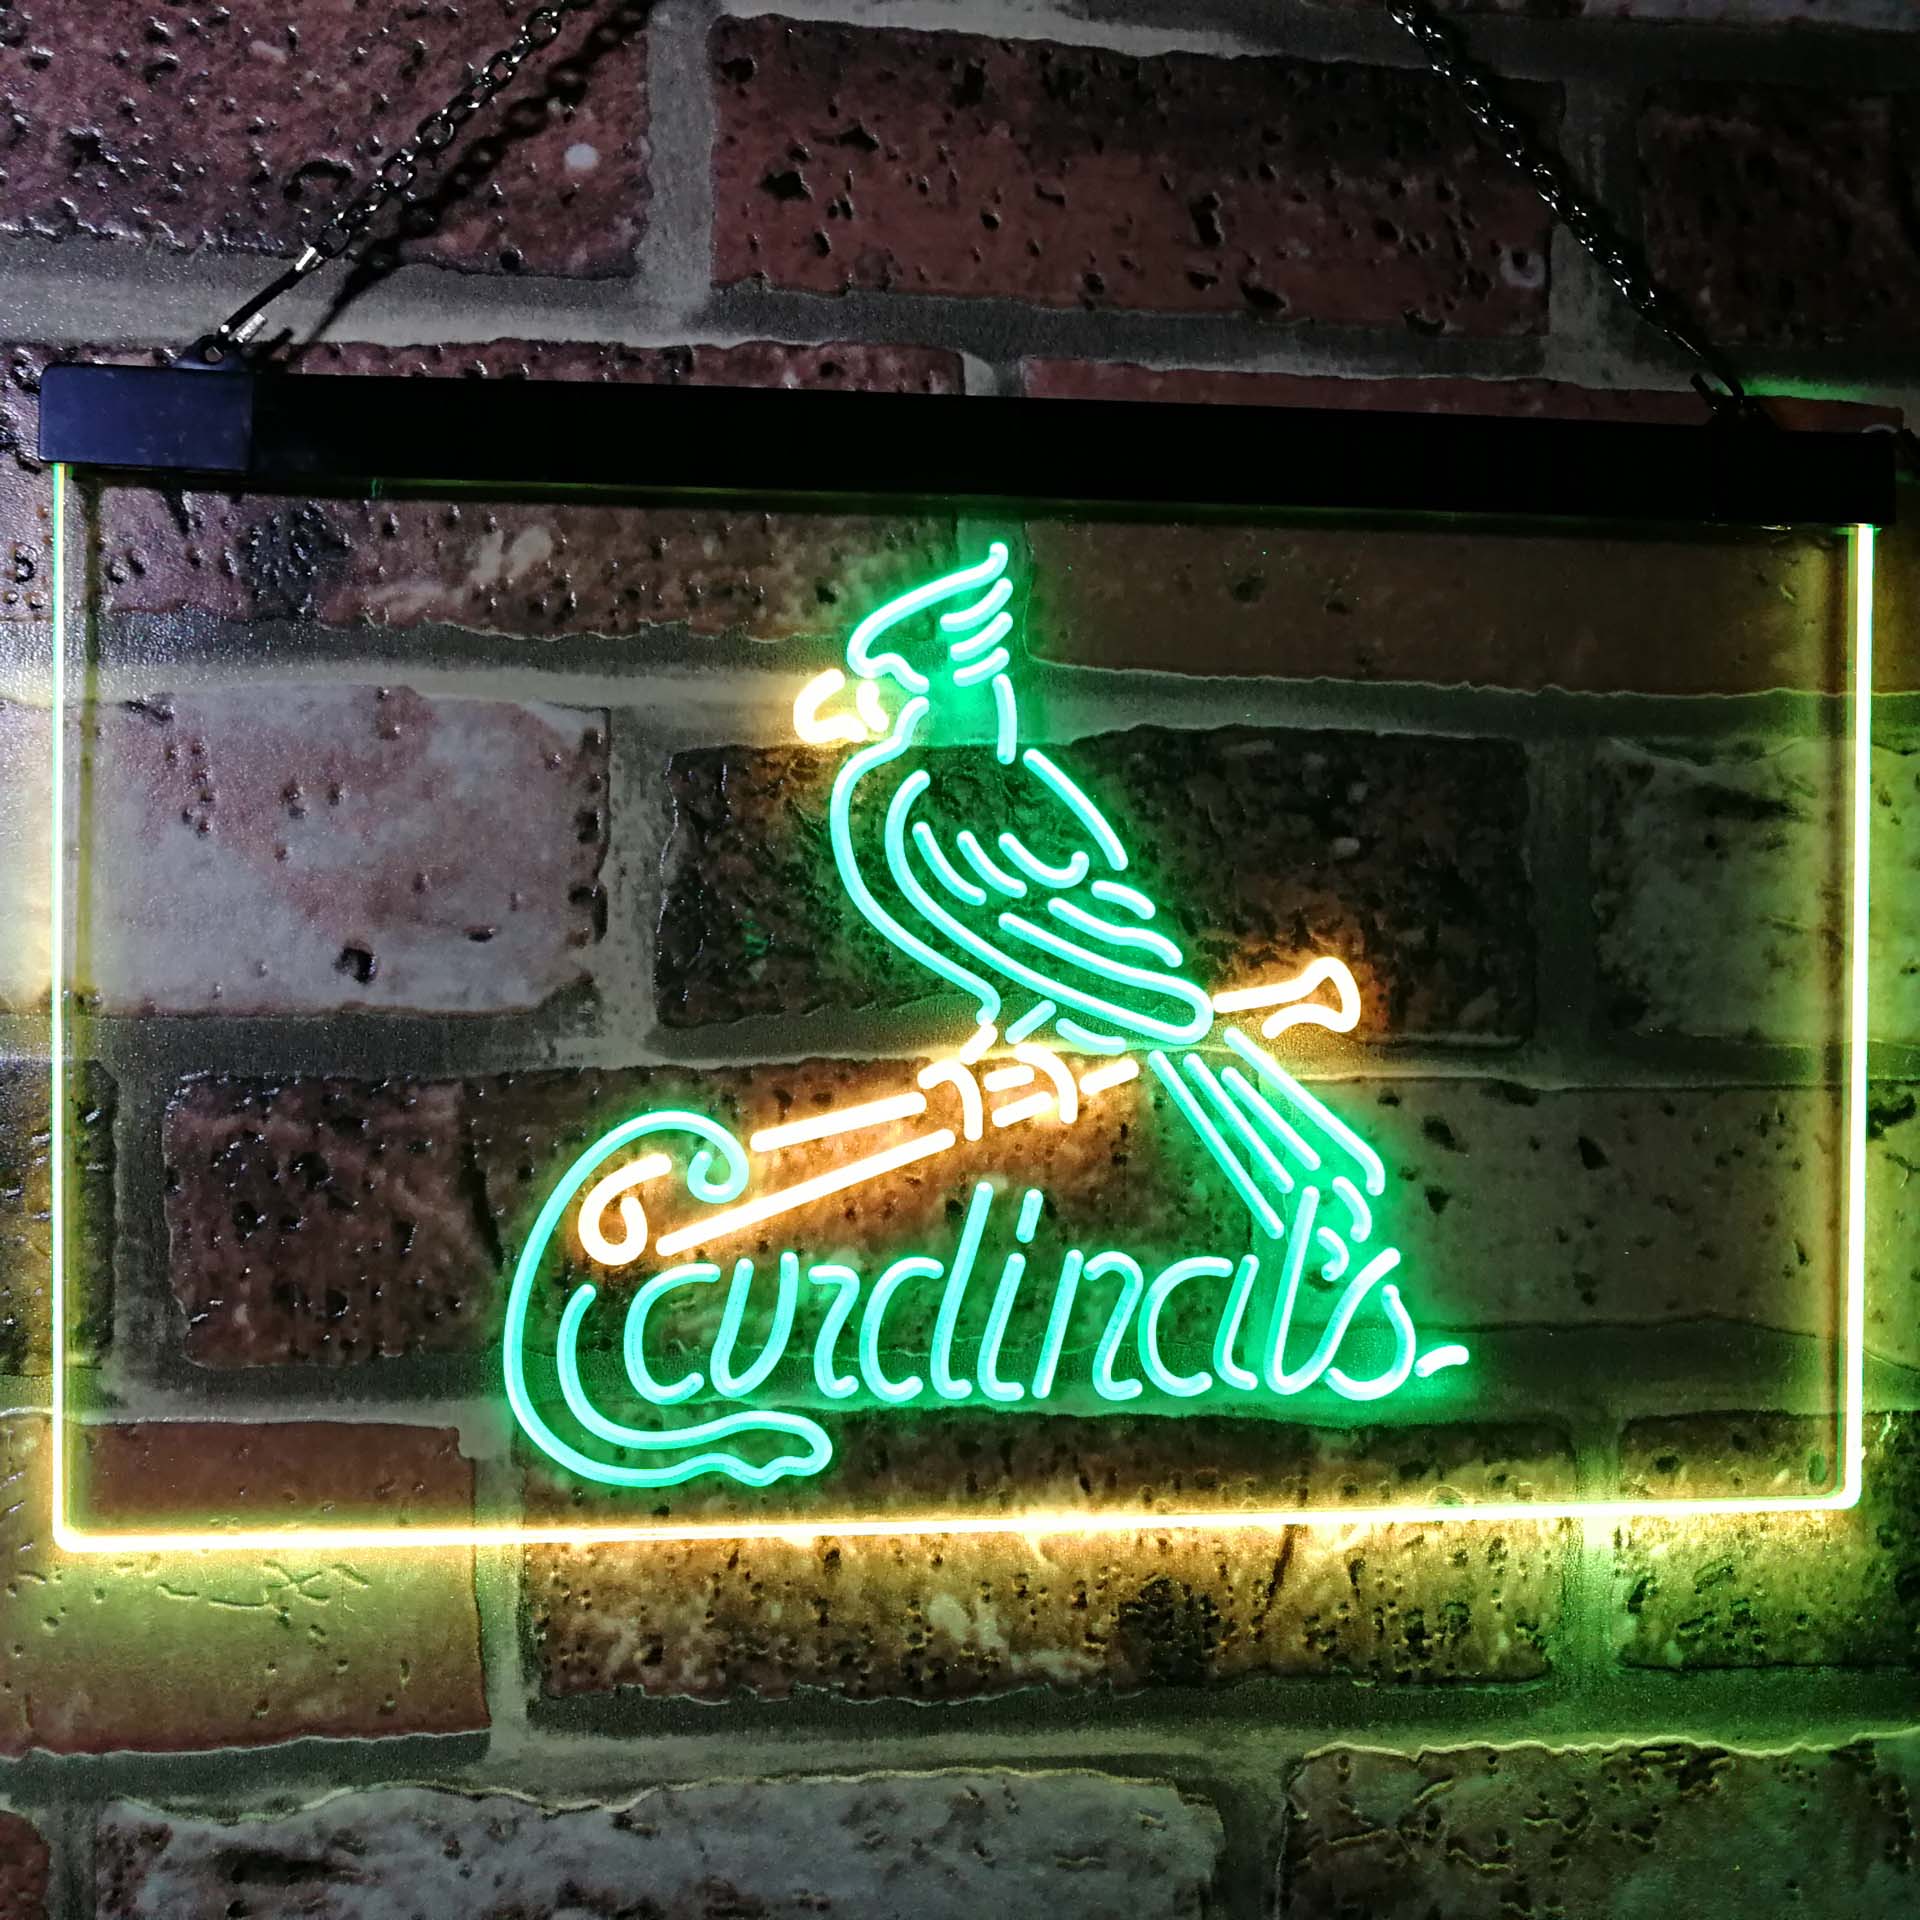 New St. Louis Cardinals Vivid LED Neon Sign Light Lamp Cute Super Bright 10